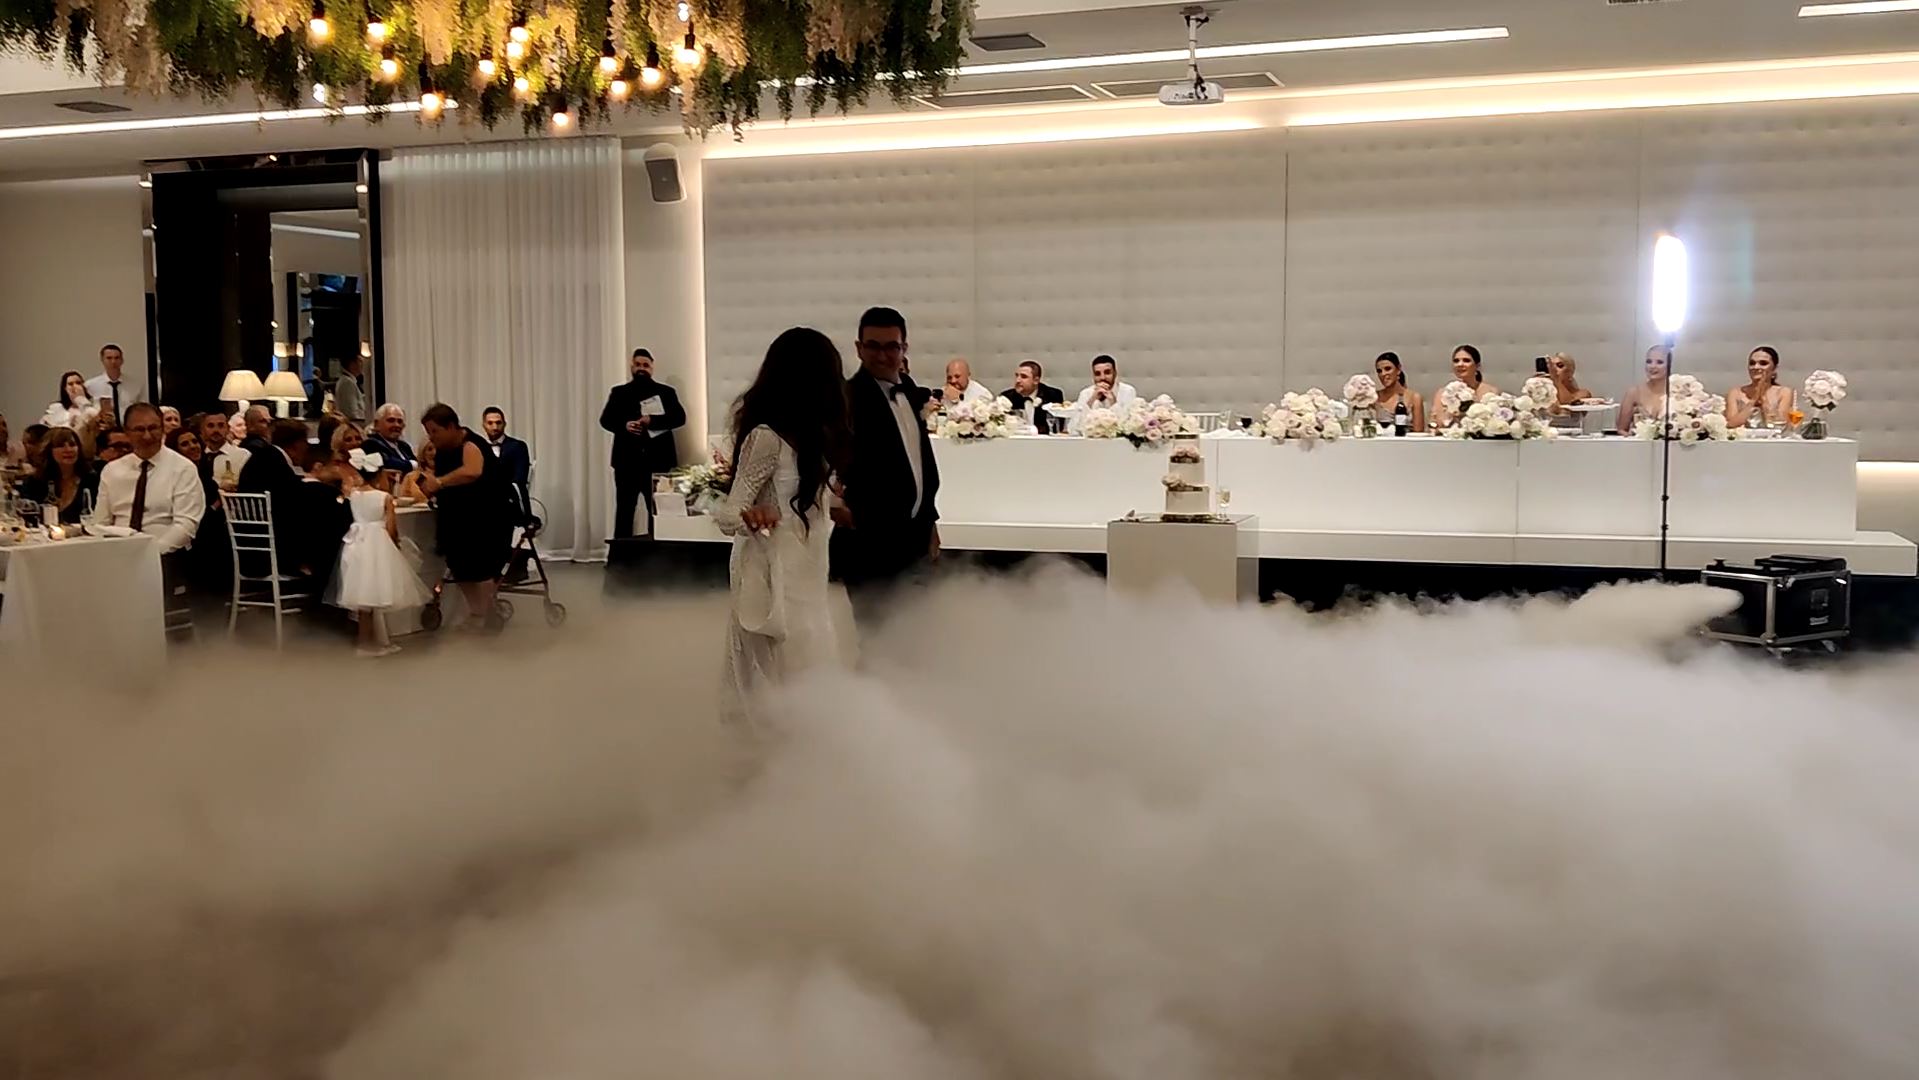 Italian wedding first dance effects